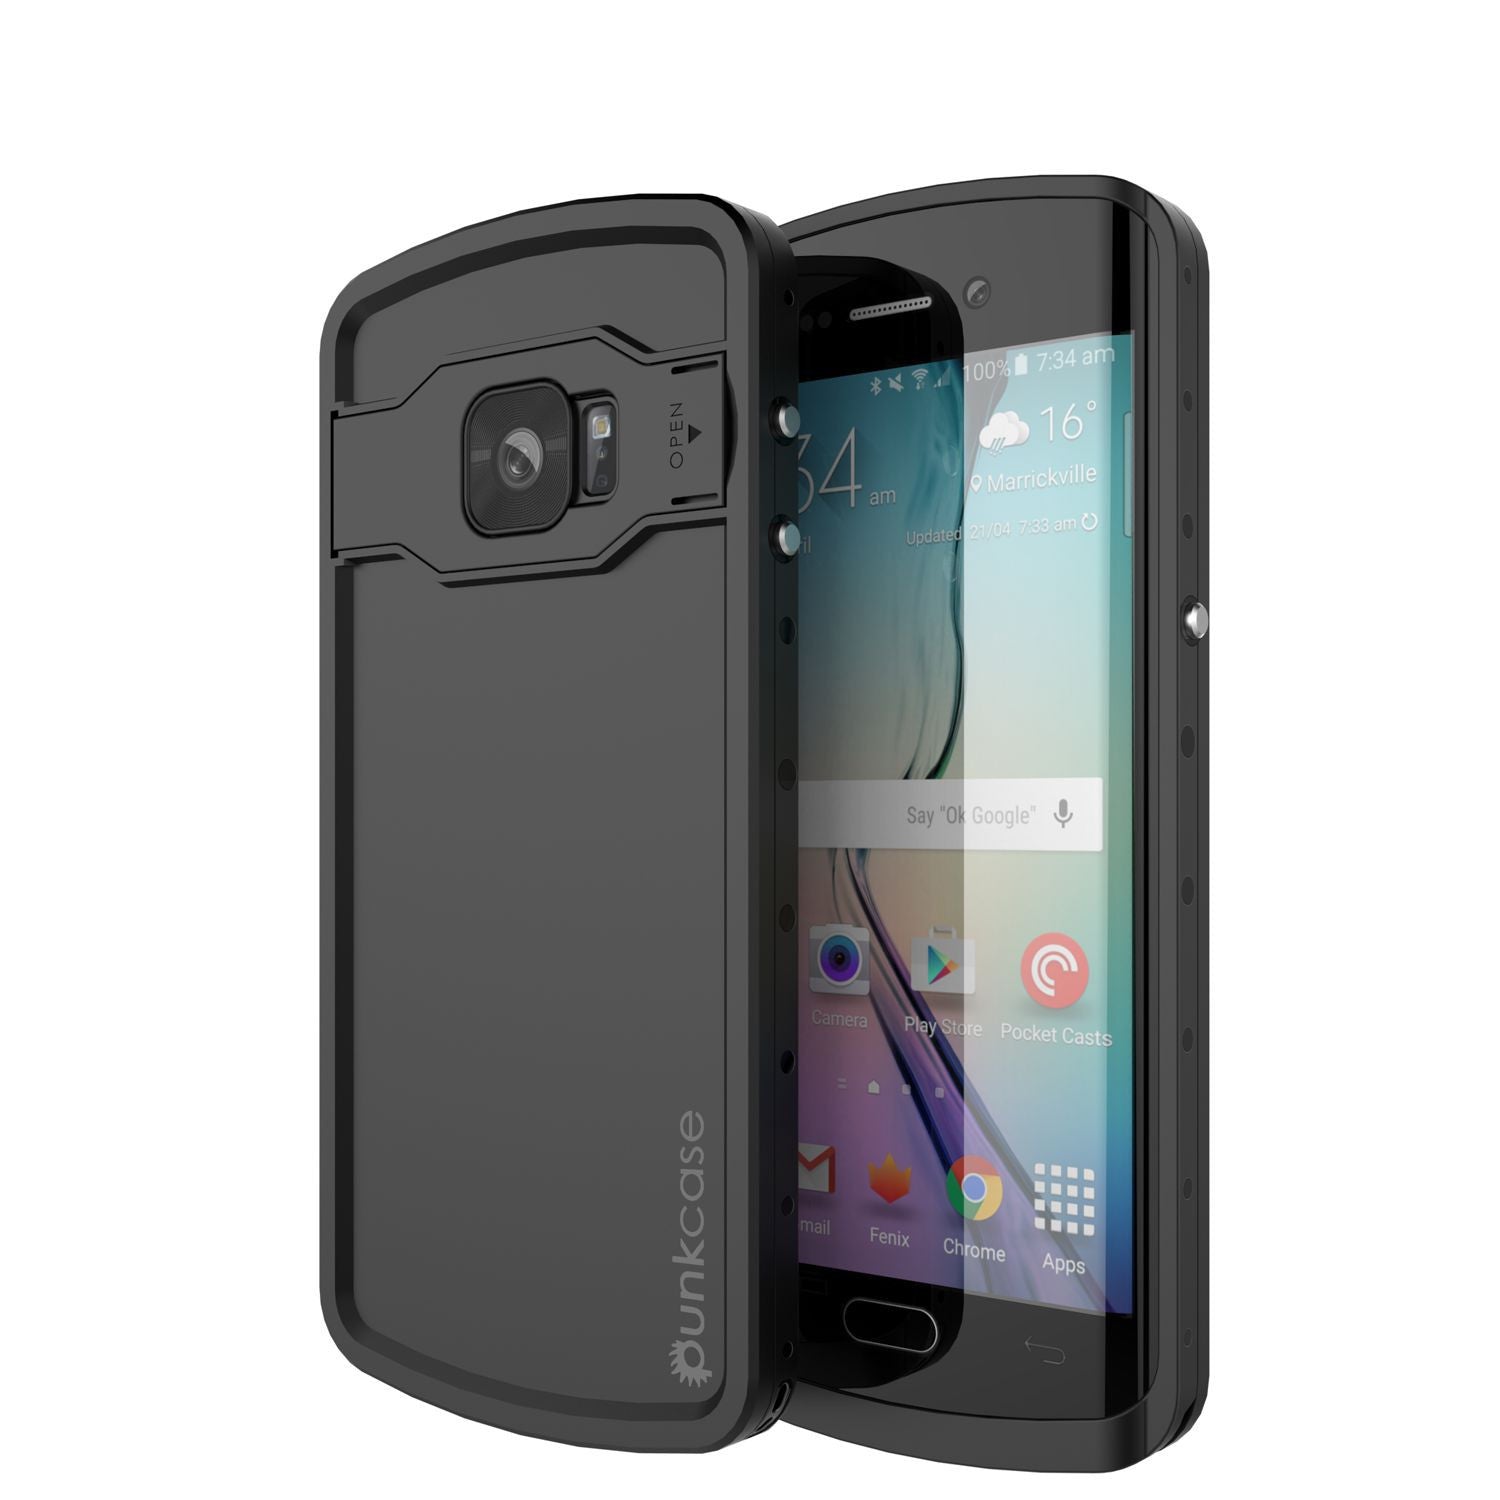 Galaxy S6 EDGE Plus Waterproof Case, Punkcase StudStar Black Shock/Dirt Proof | Lifetime Warranty (Color in image: black)